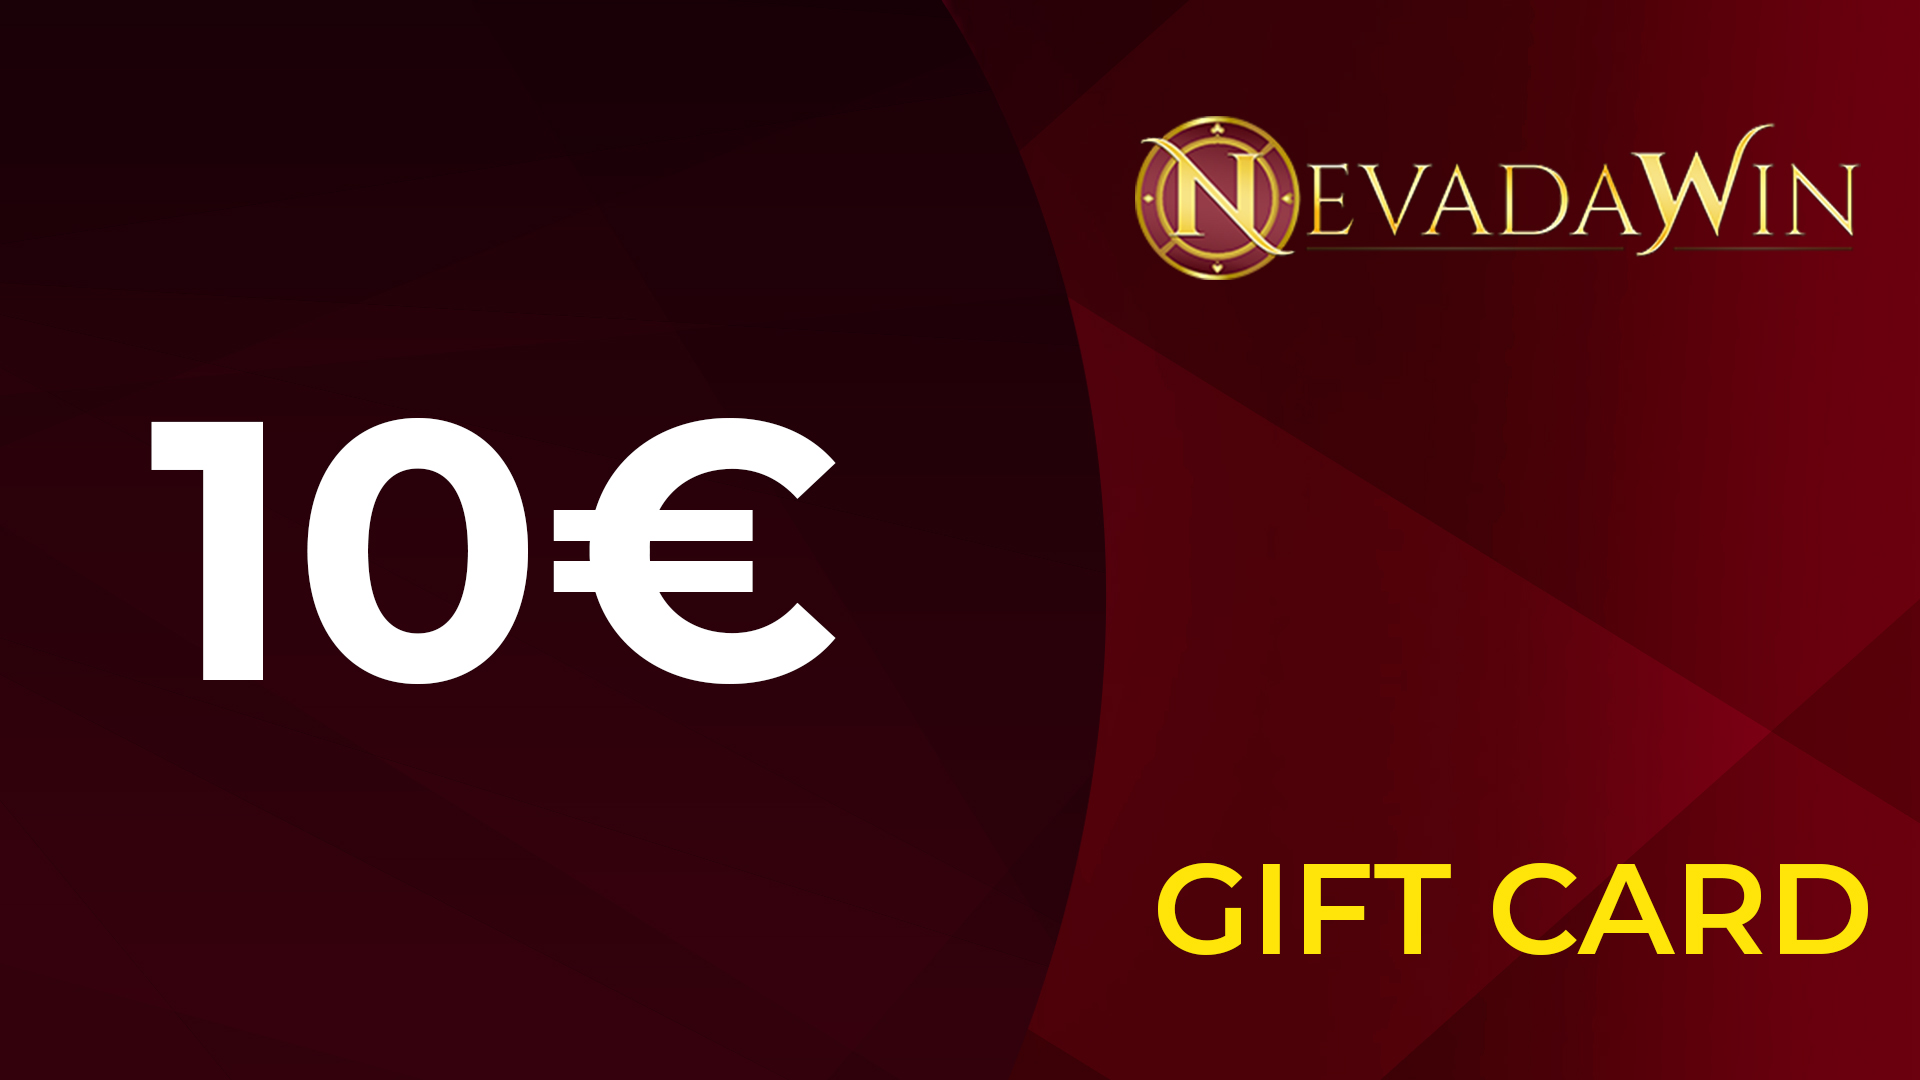 NevadaWin €10 Giftcard 10.99 $